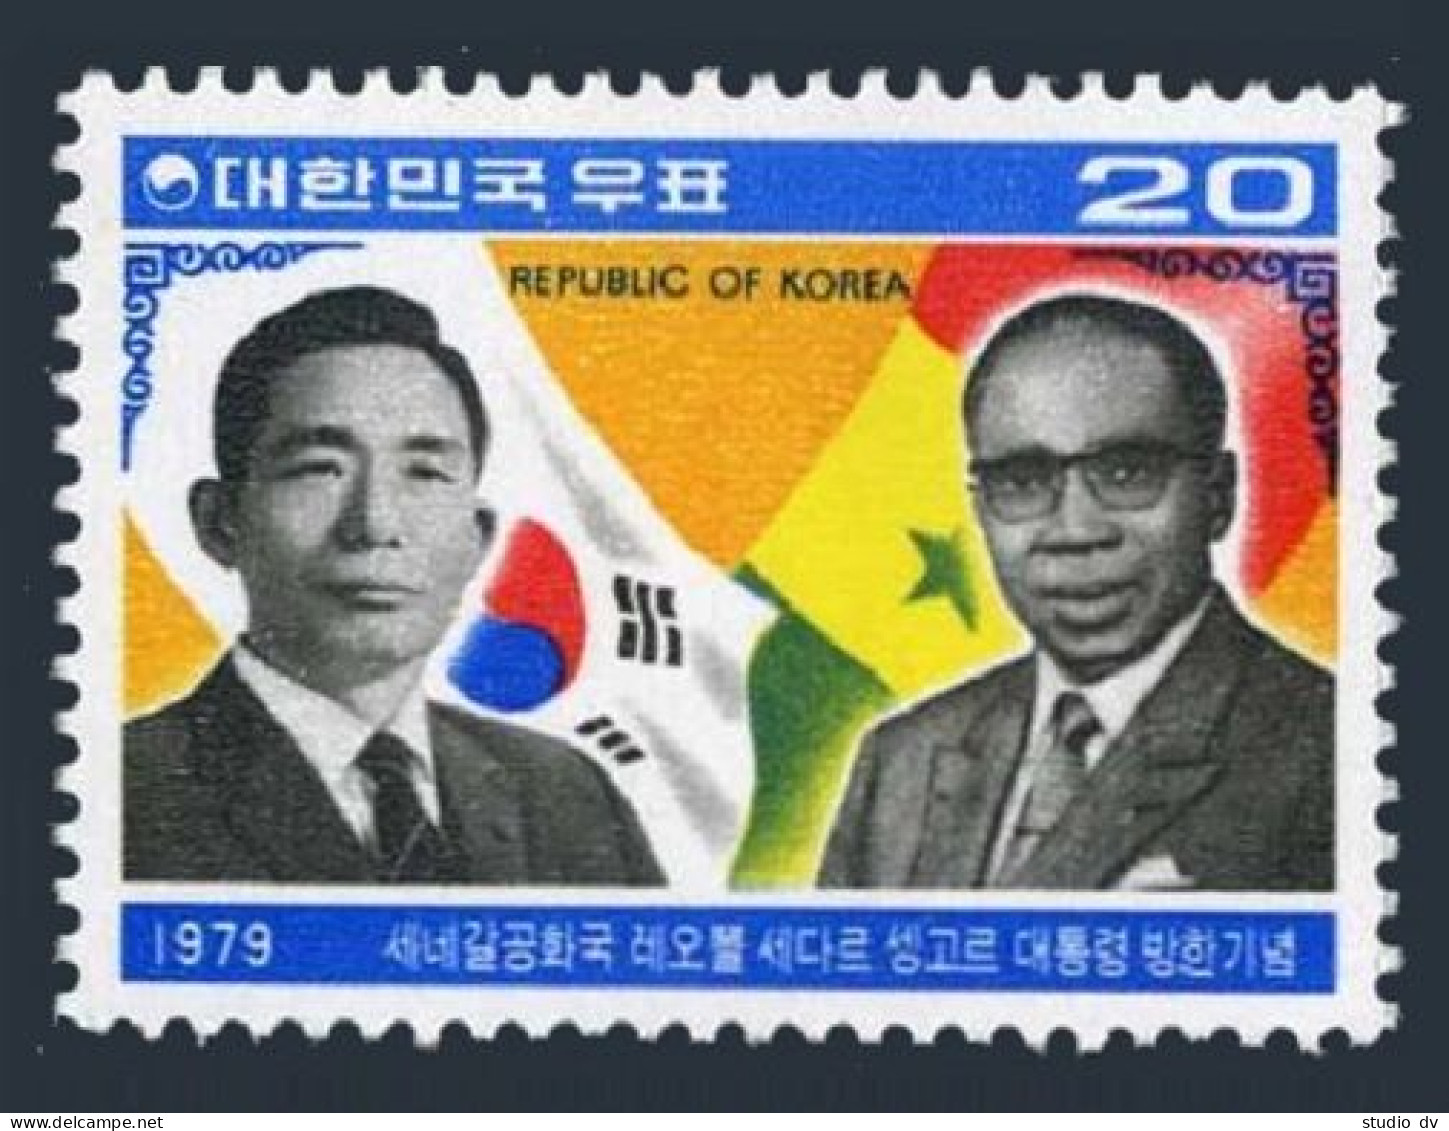 Korea South 1168,1168a Sheet,MNH. Presidents Leopold Senghor,Senegal,Park,1979. - Corea Del Sur